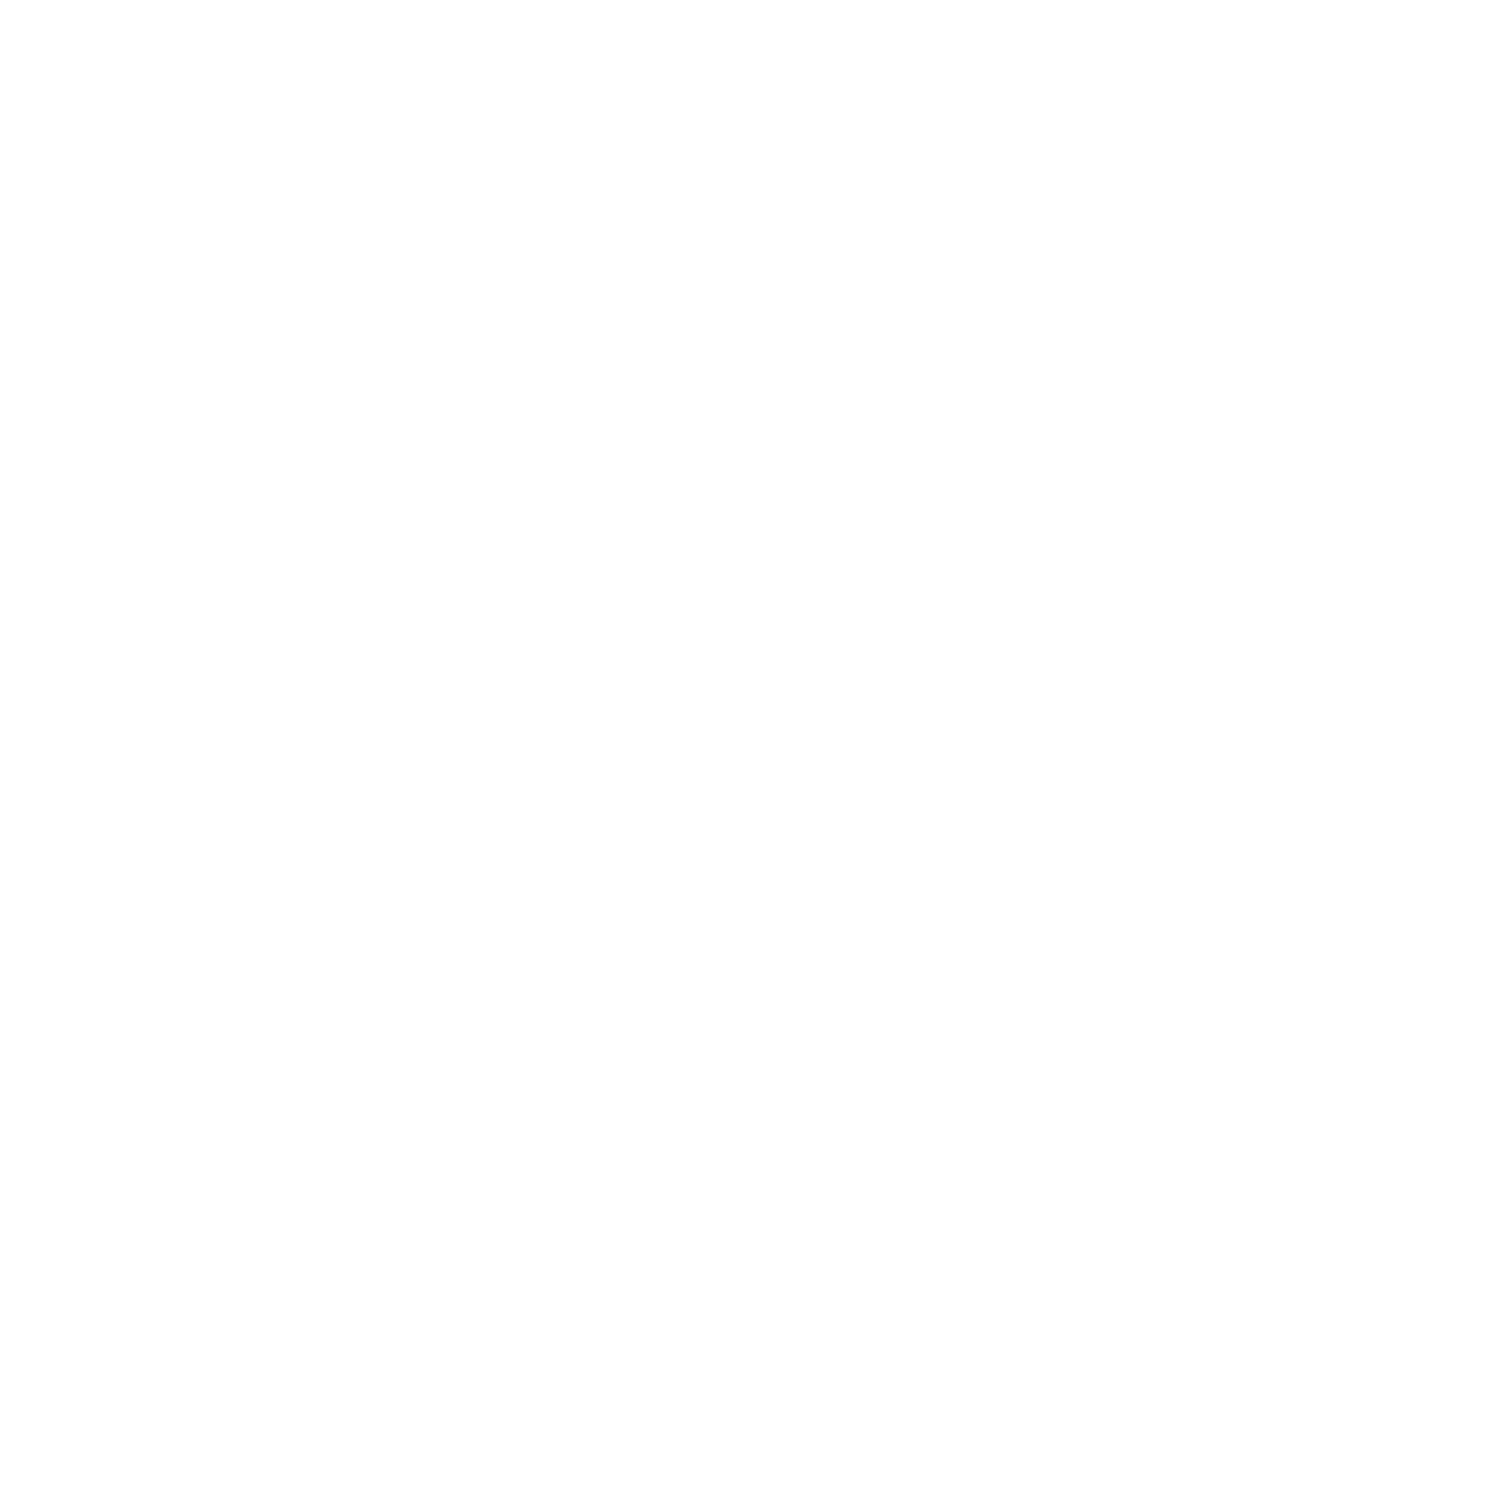 CitySports